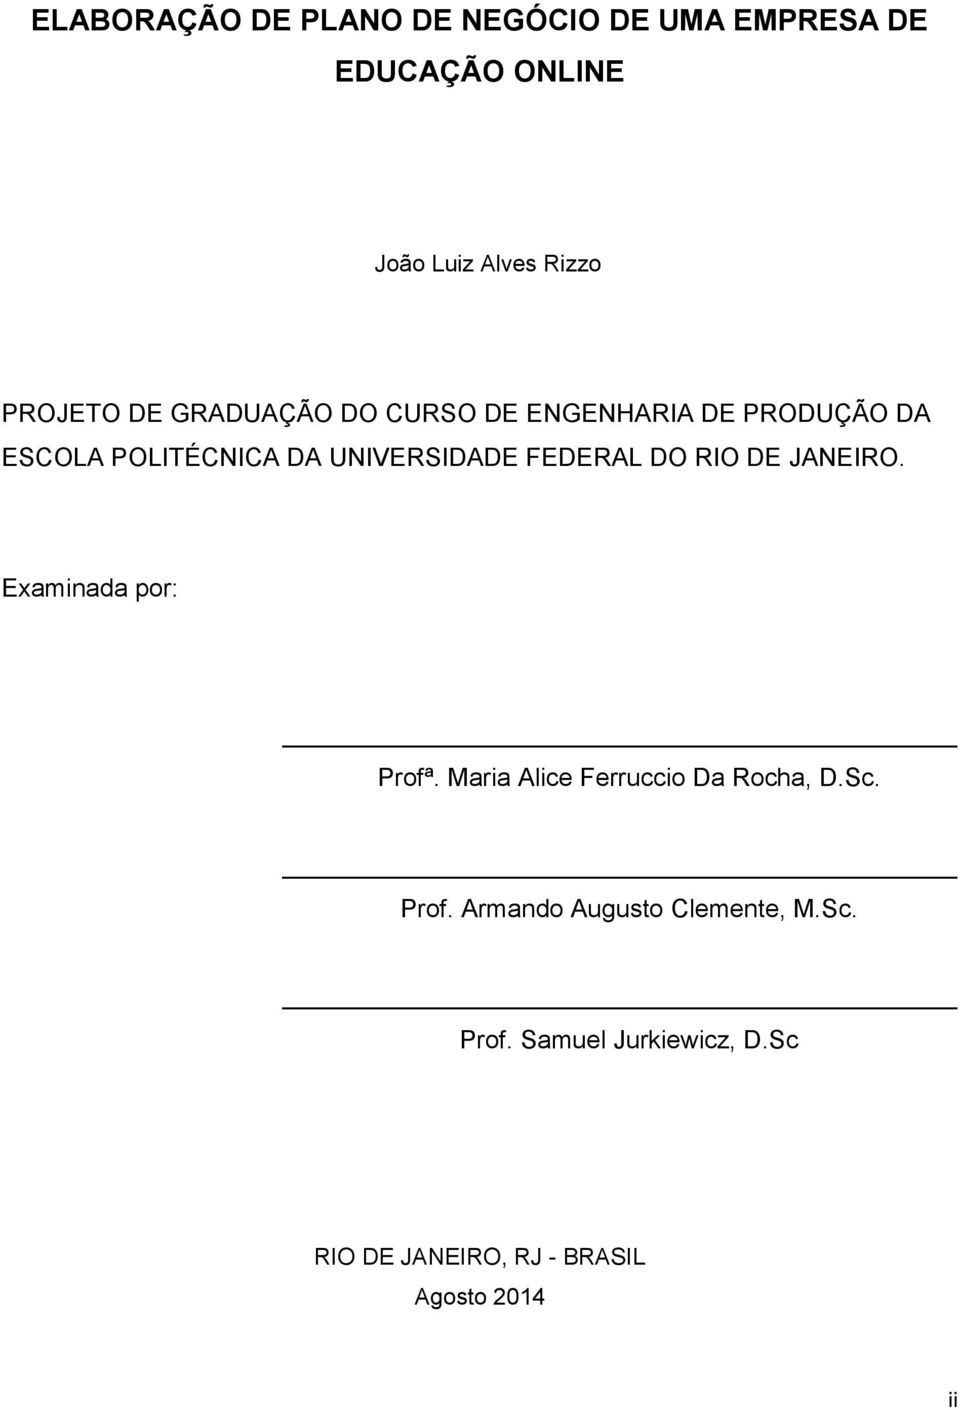 DO RIO DE JANEIRO. Examinada por: Profª. Maria Alice Ferruccio Da Rocha, D.Sc. Prof. Armando Augusto Clemente, M.